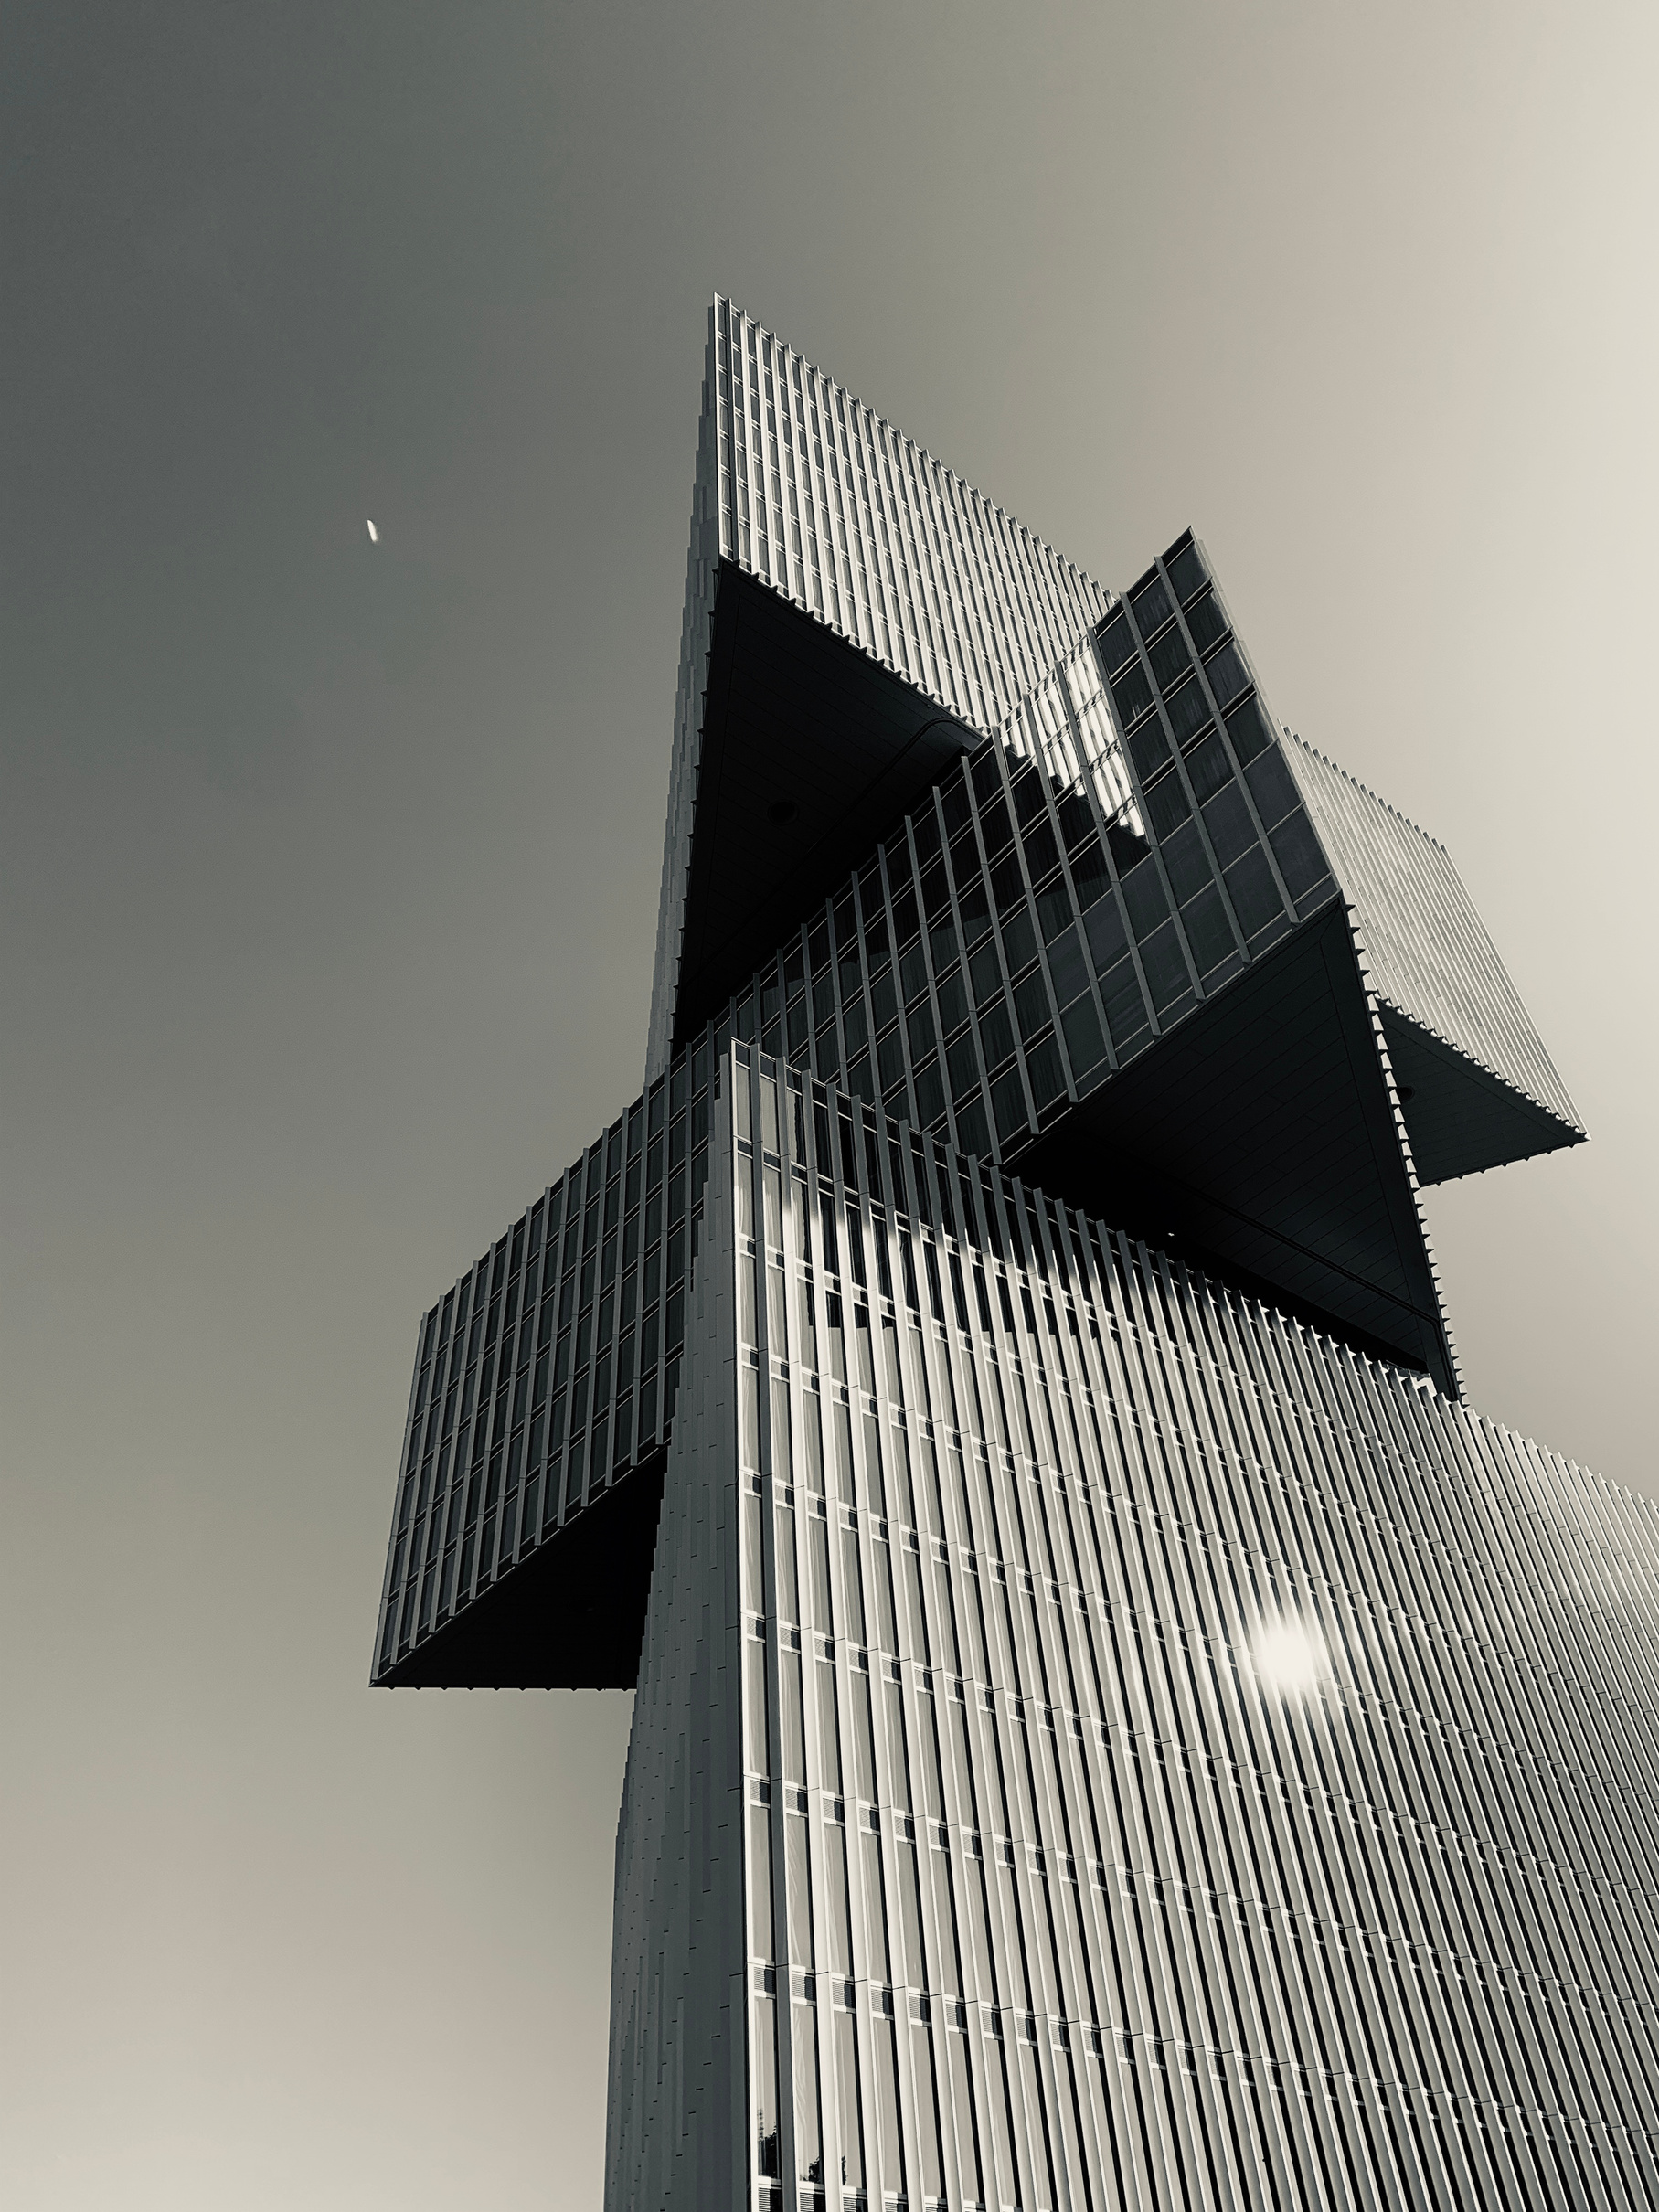 Monochrome Photo Of Building